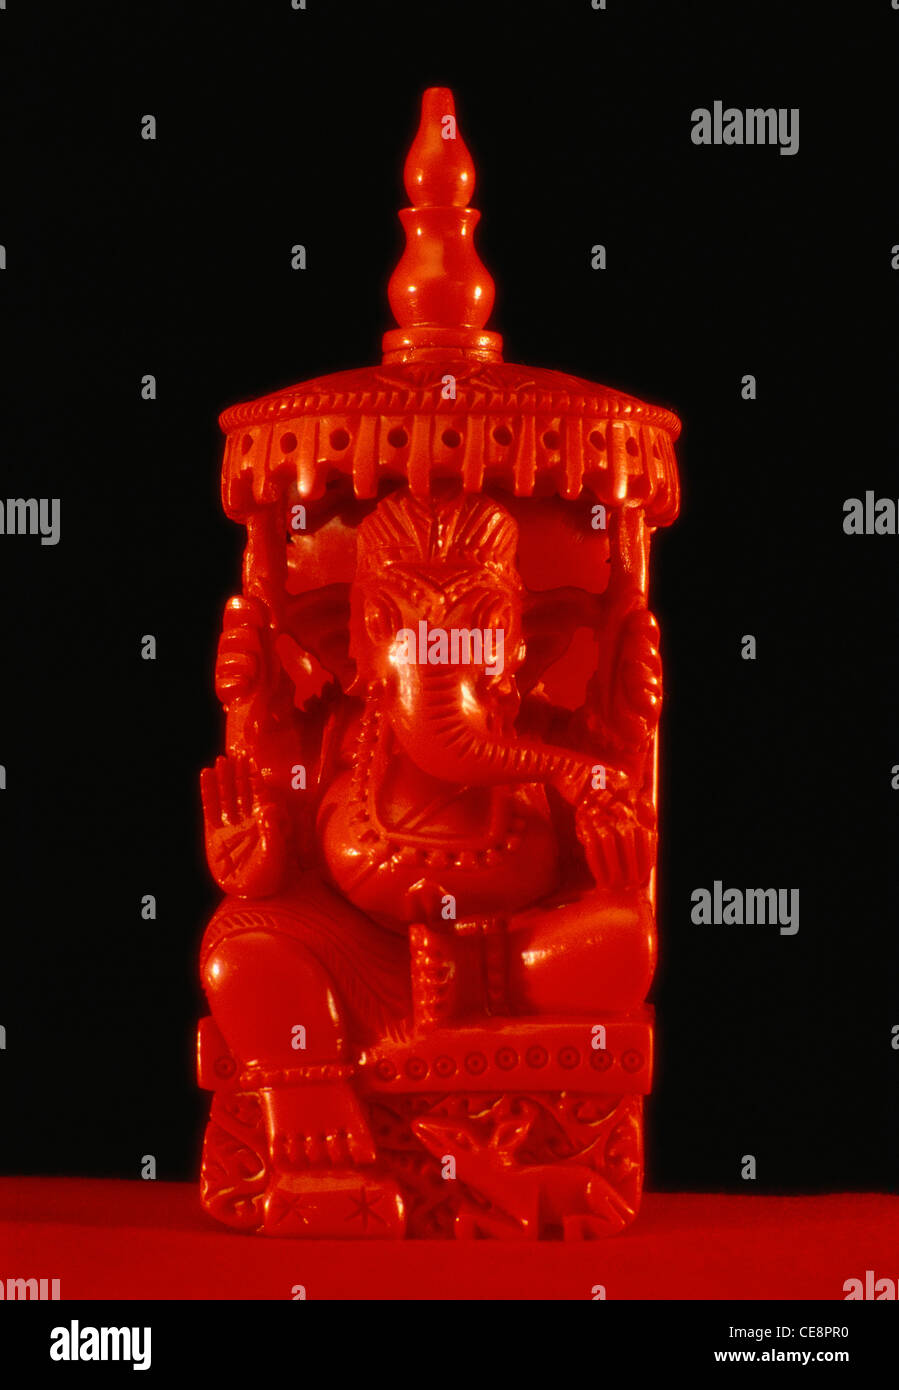 AAD 81383 : Indian God Ganesh Elephant head Lord made in stone india Stock Photo